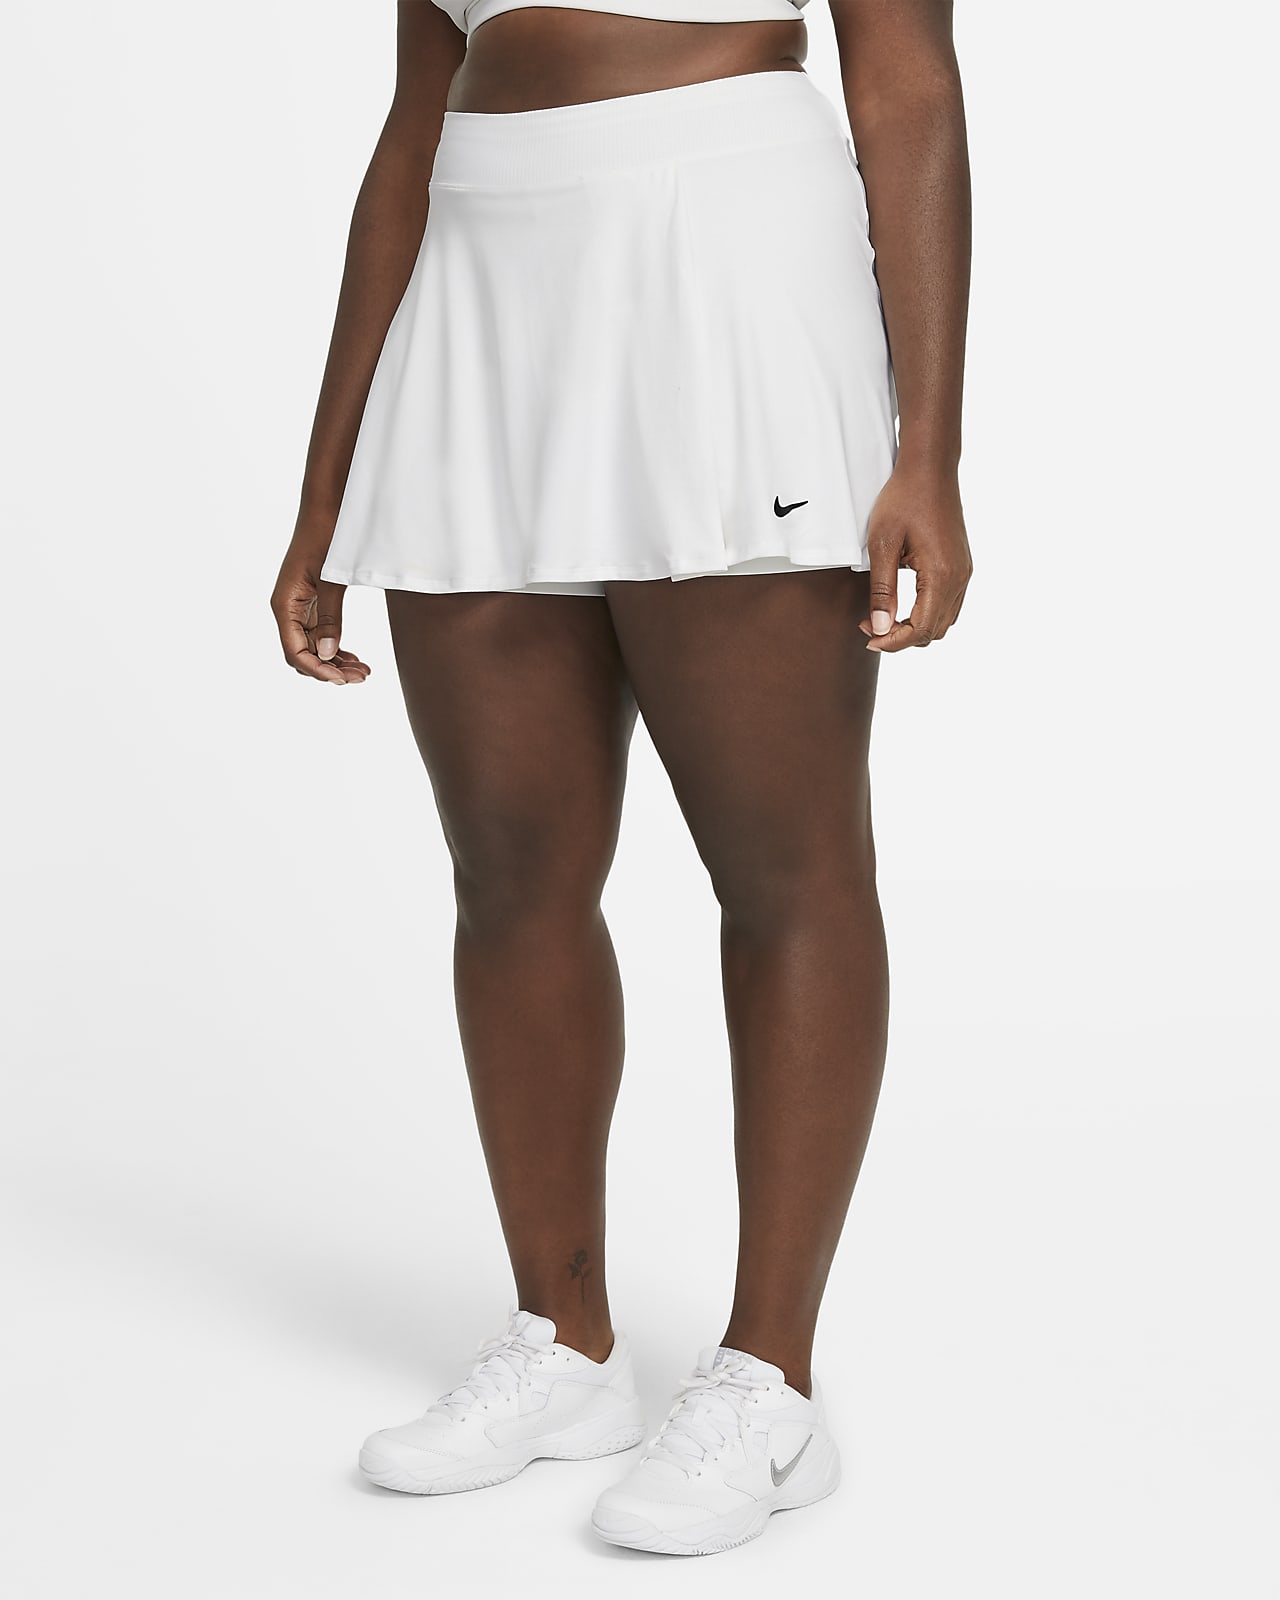 nike court slam tennis dress